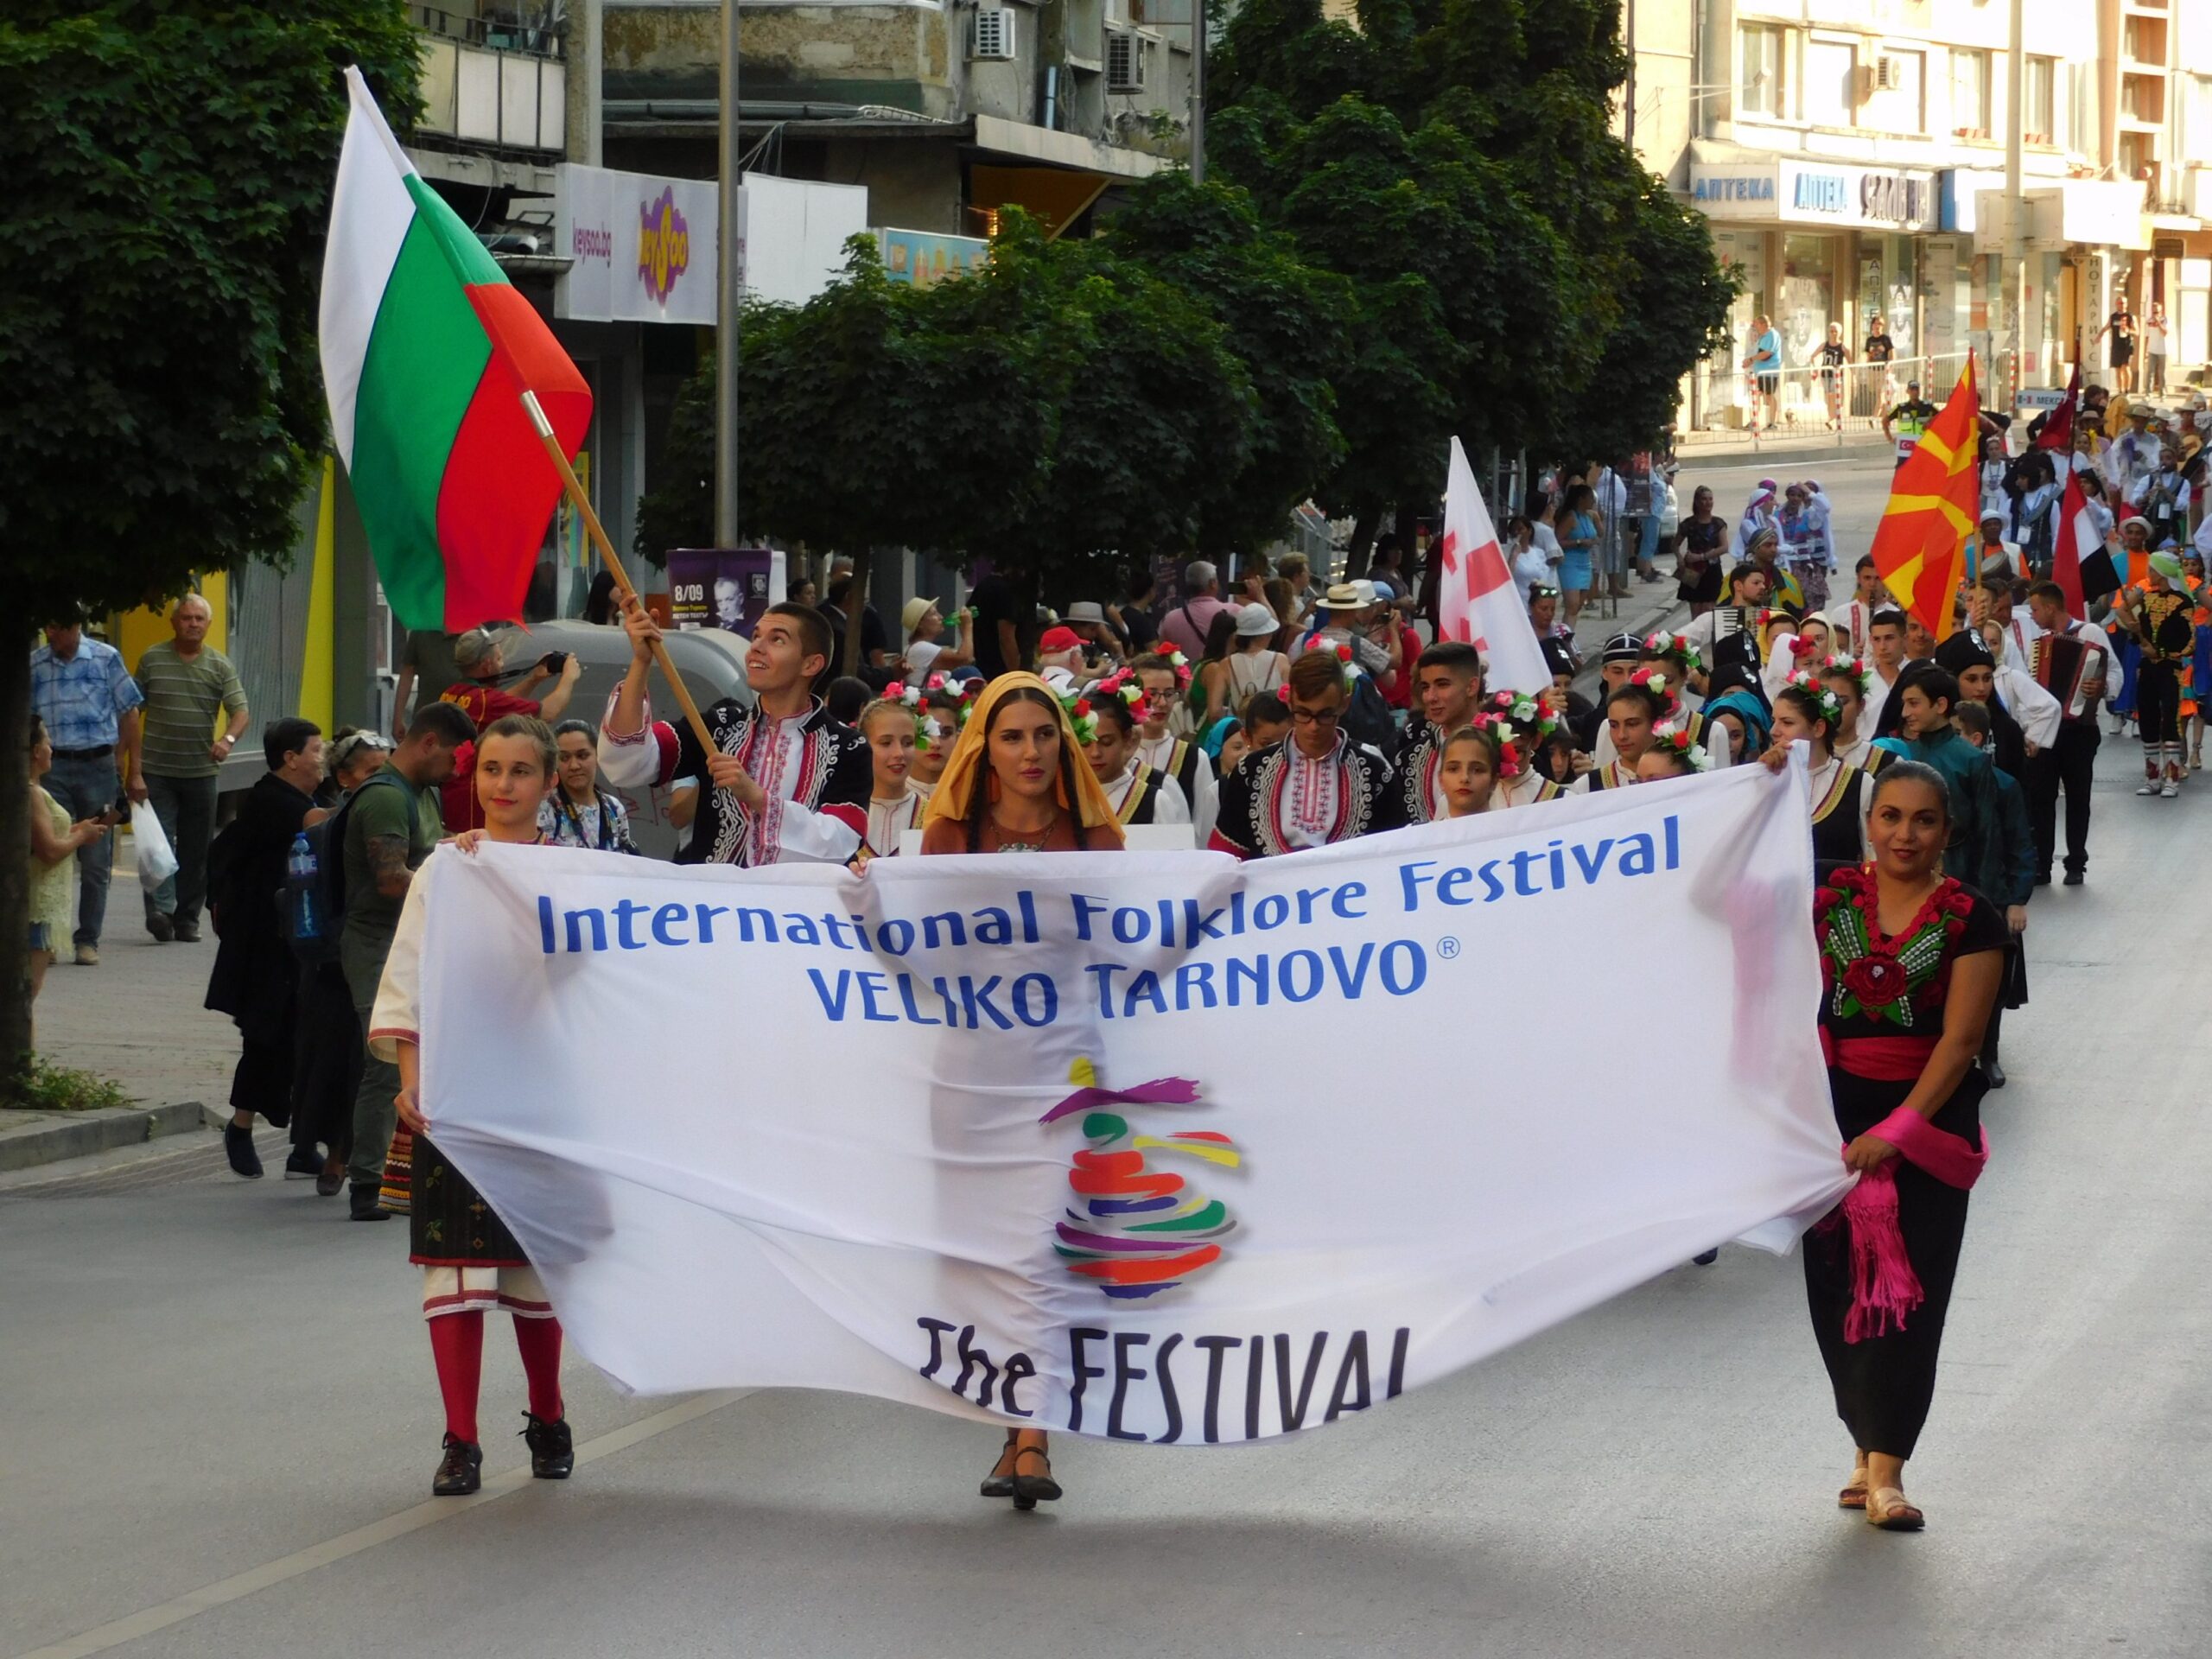 International folklore festival